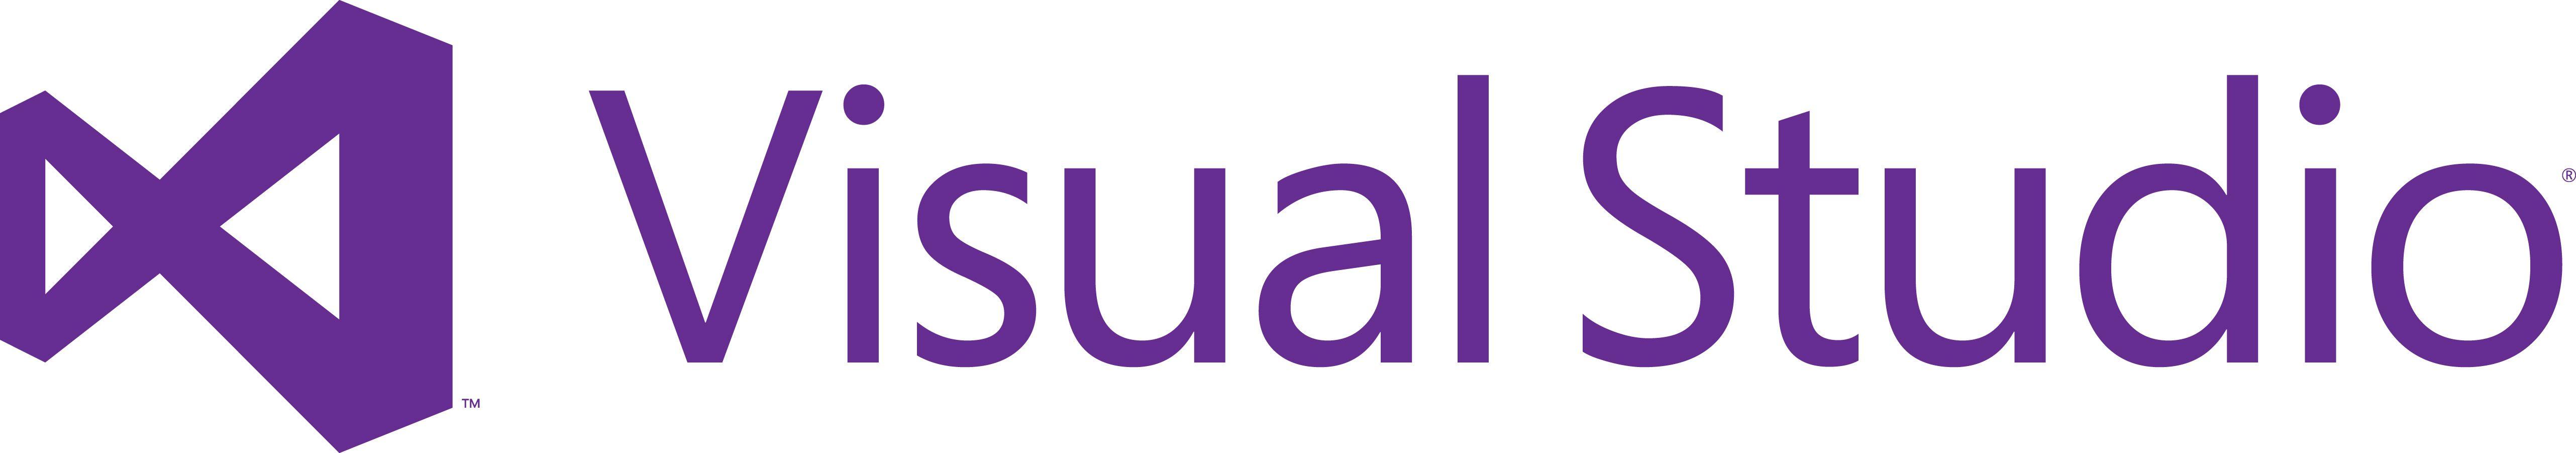 Visual Studio 2013 Logo - Visual studio Logos